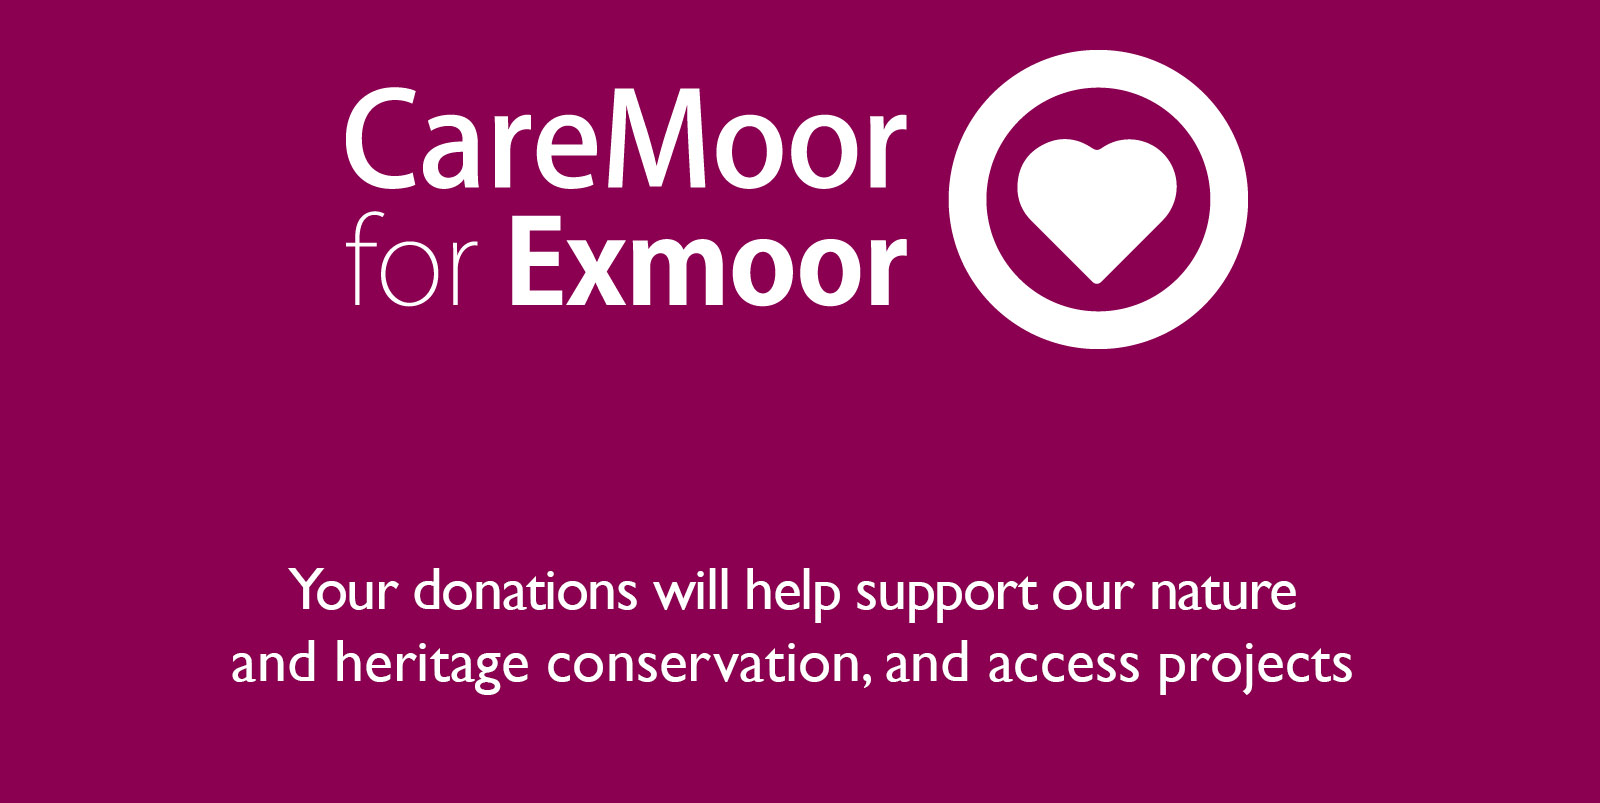 Caremoor logo and text saying 